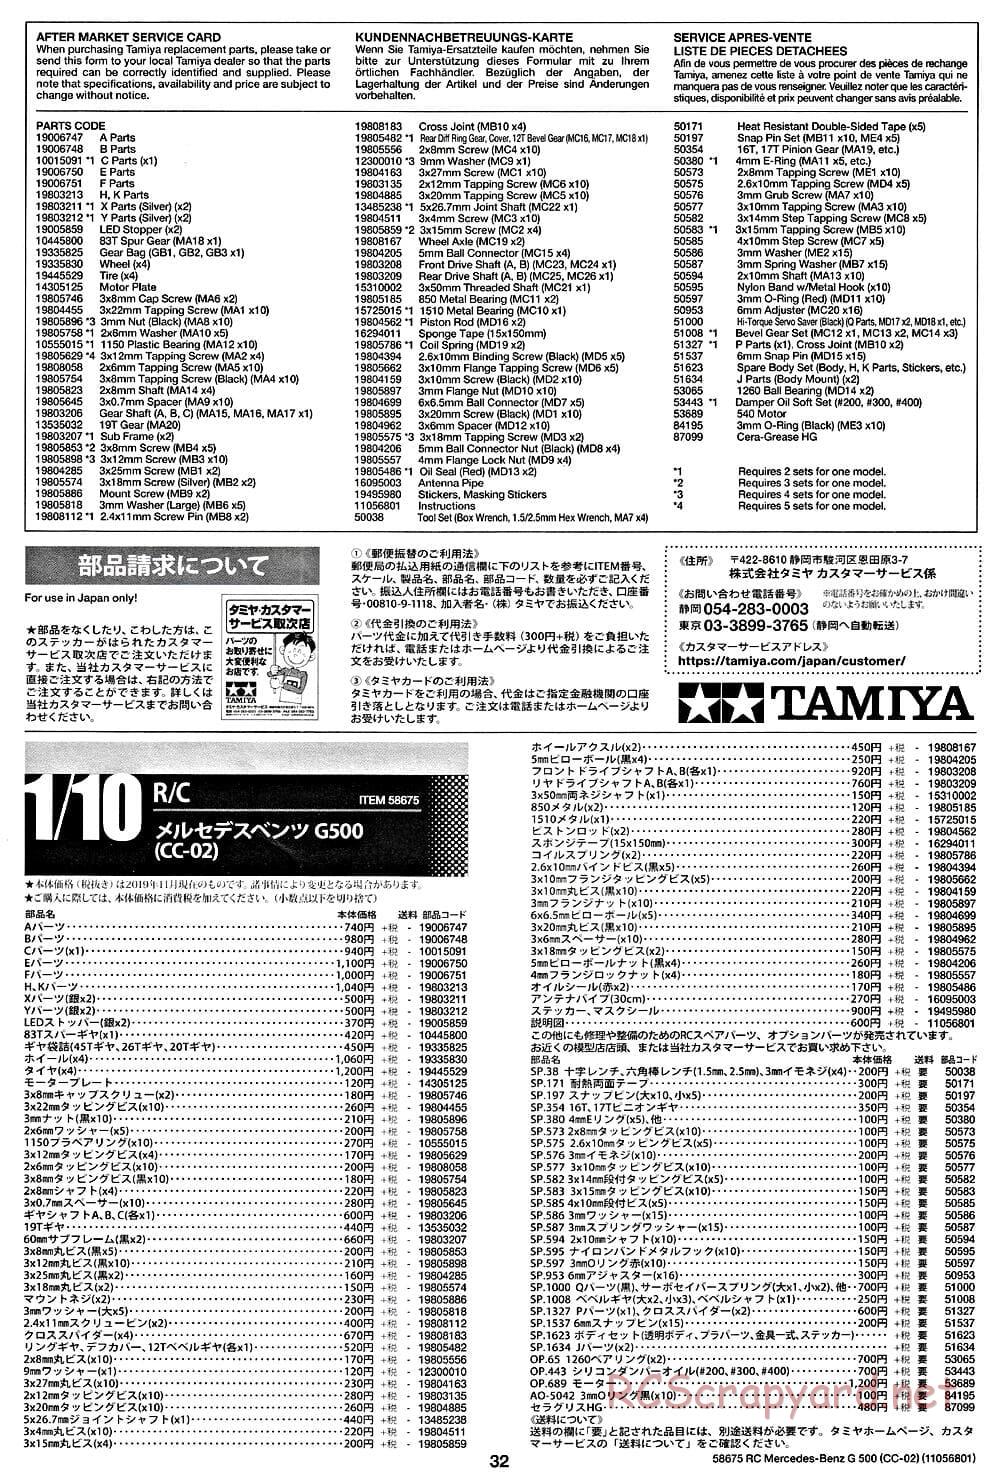 Tamiya - Mercedes-Benz G500 - CC-02 Chassis - Manual - Page 32